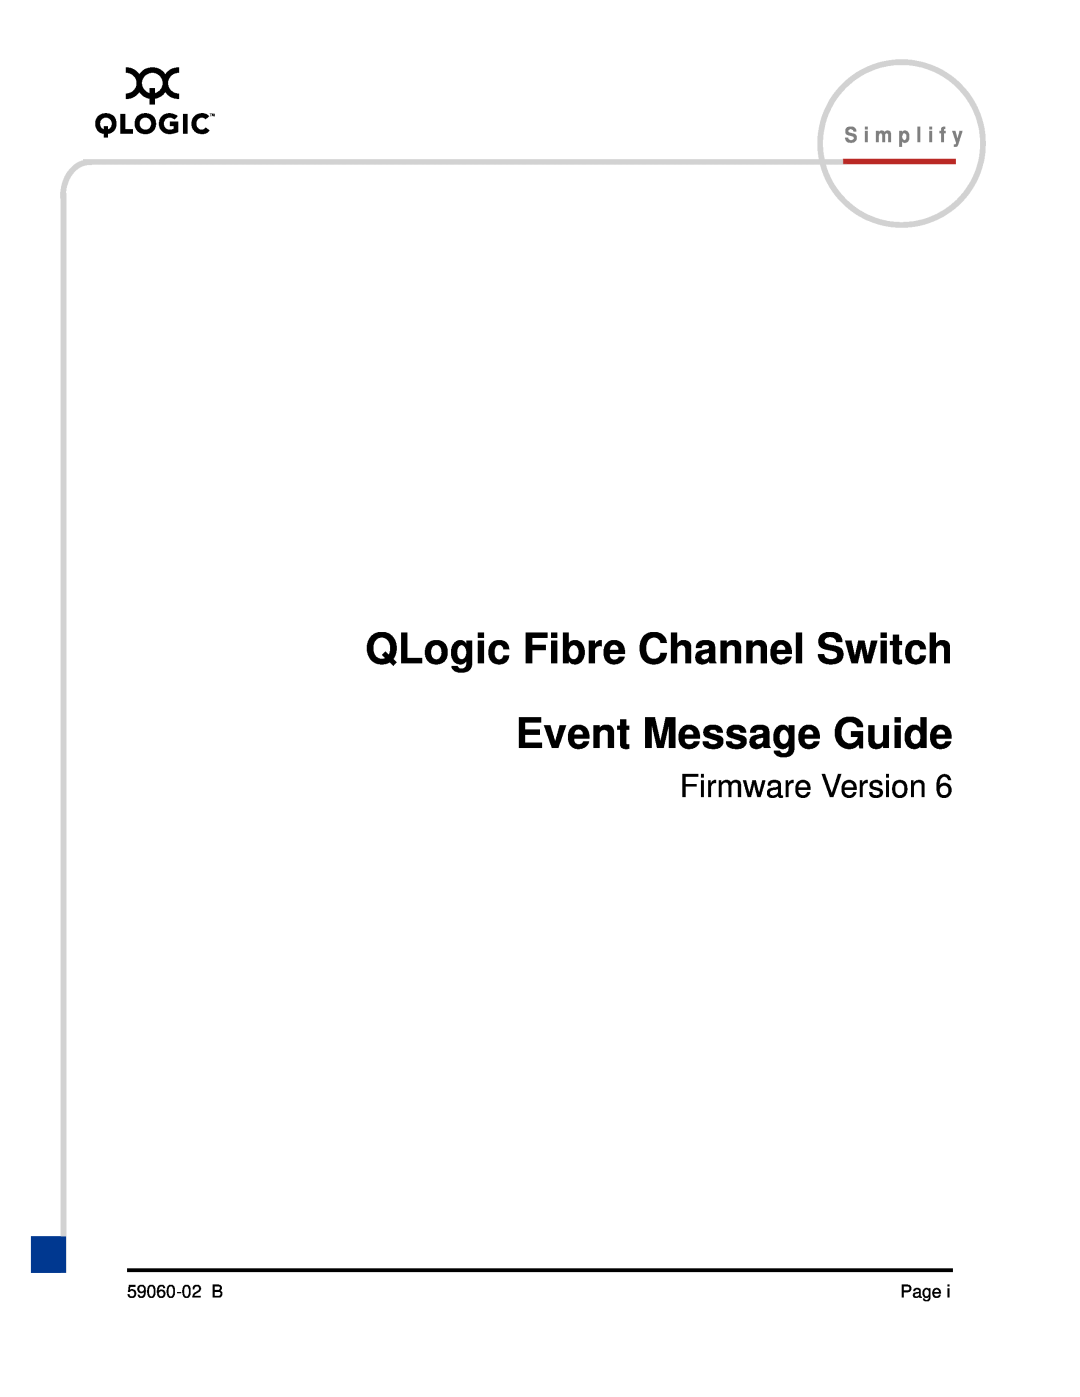 Q-Logic 59060-02 B manual Firmware Version, QLogic Fibre Channel Switch Event Message Guide, S i m p l i f y 